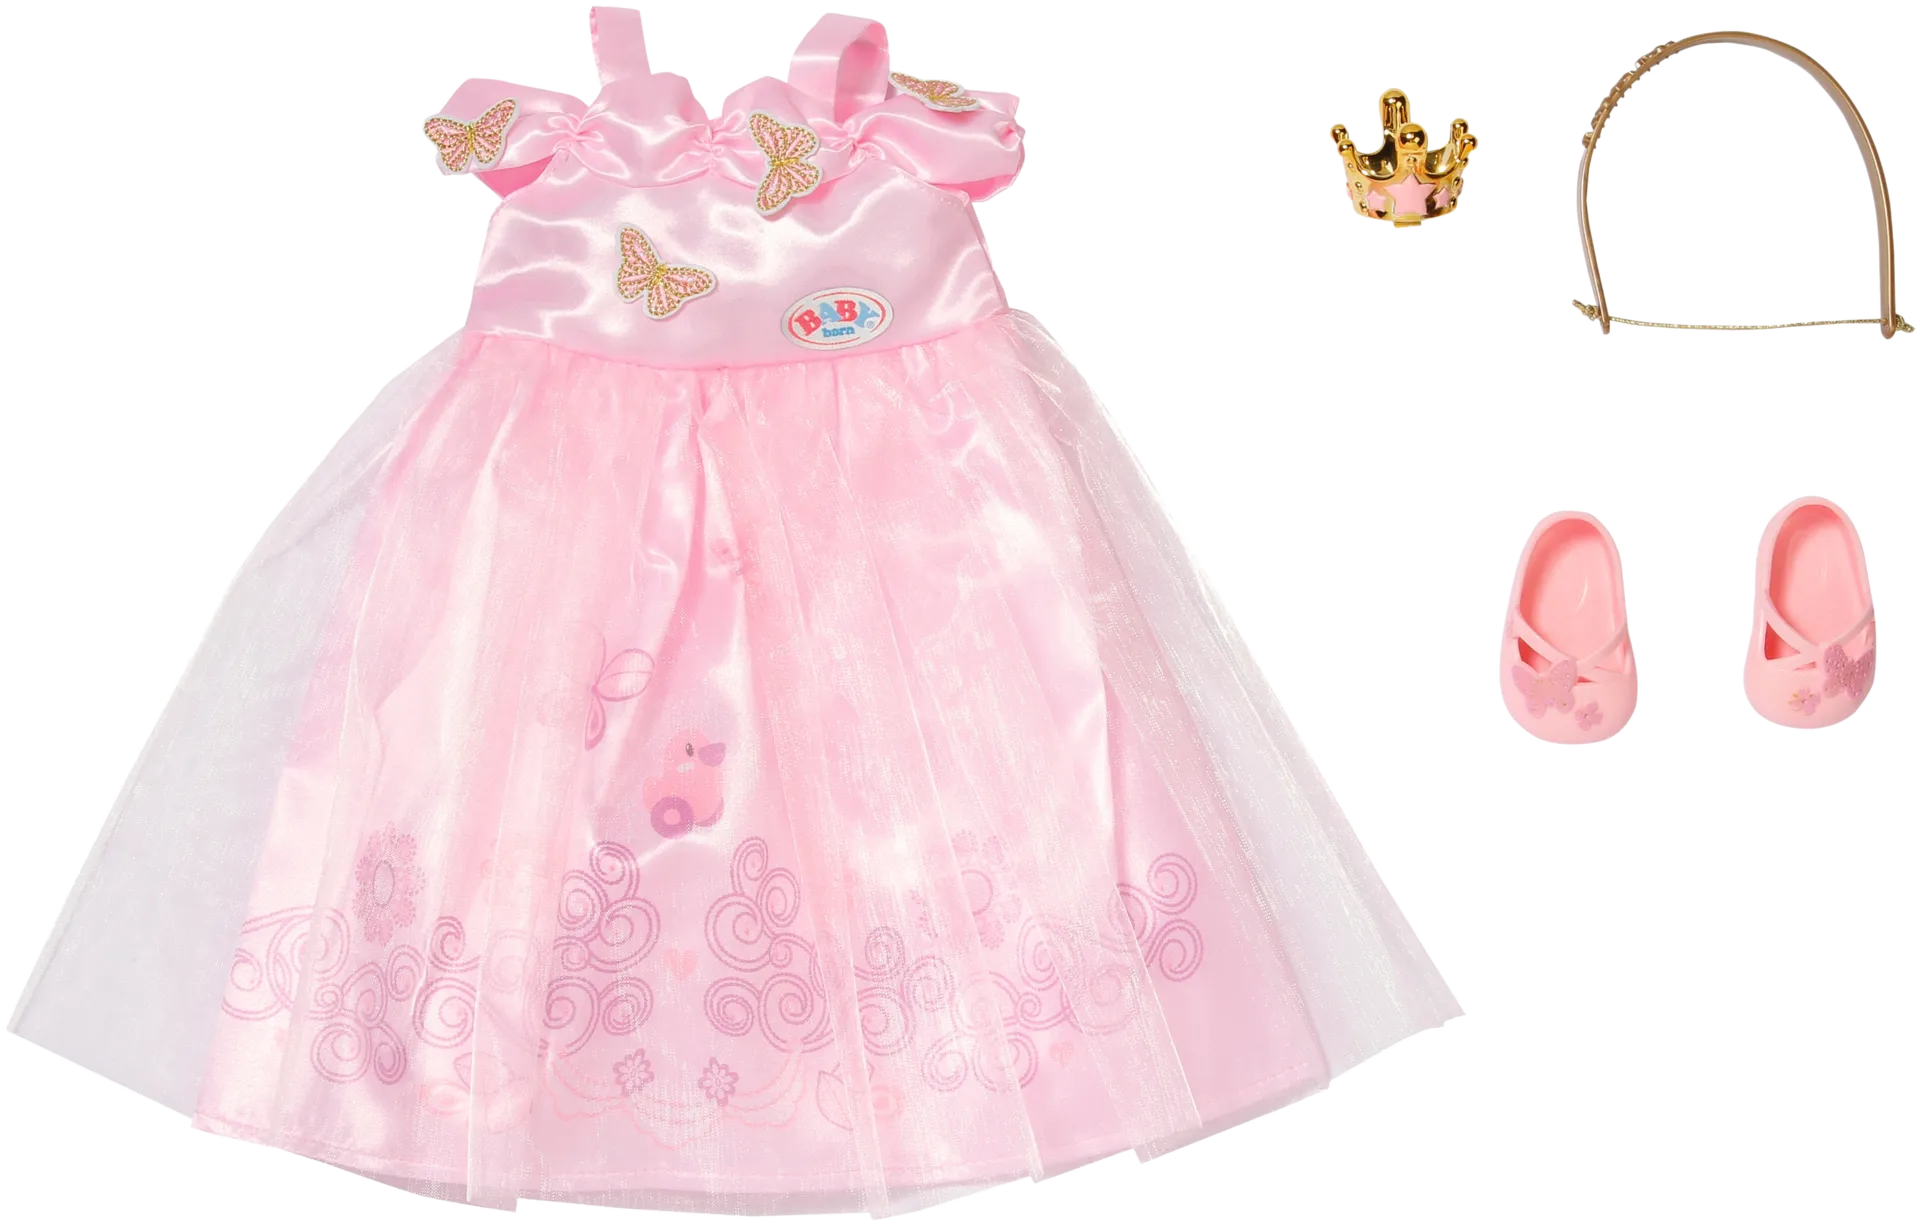 BABY born Deluxe prinsessa-asu 43 cm - 1